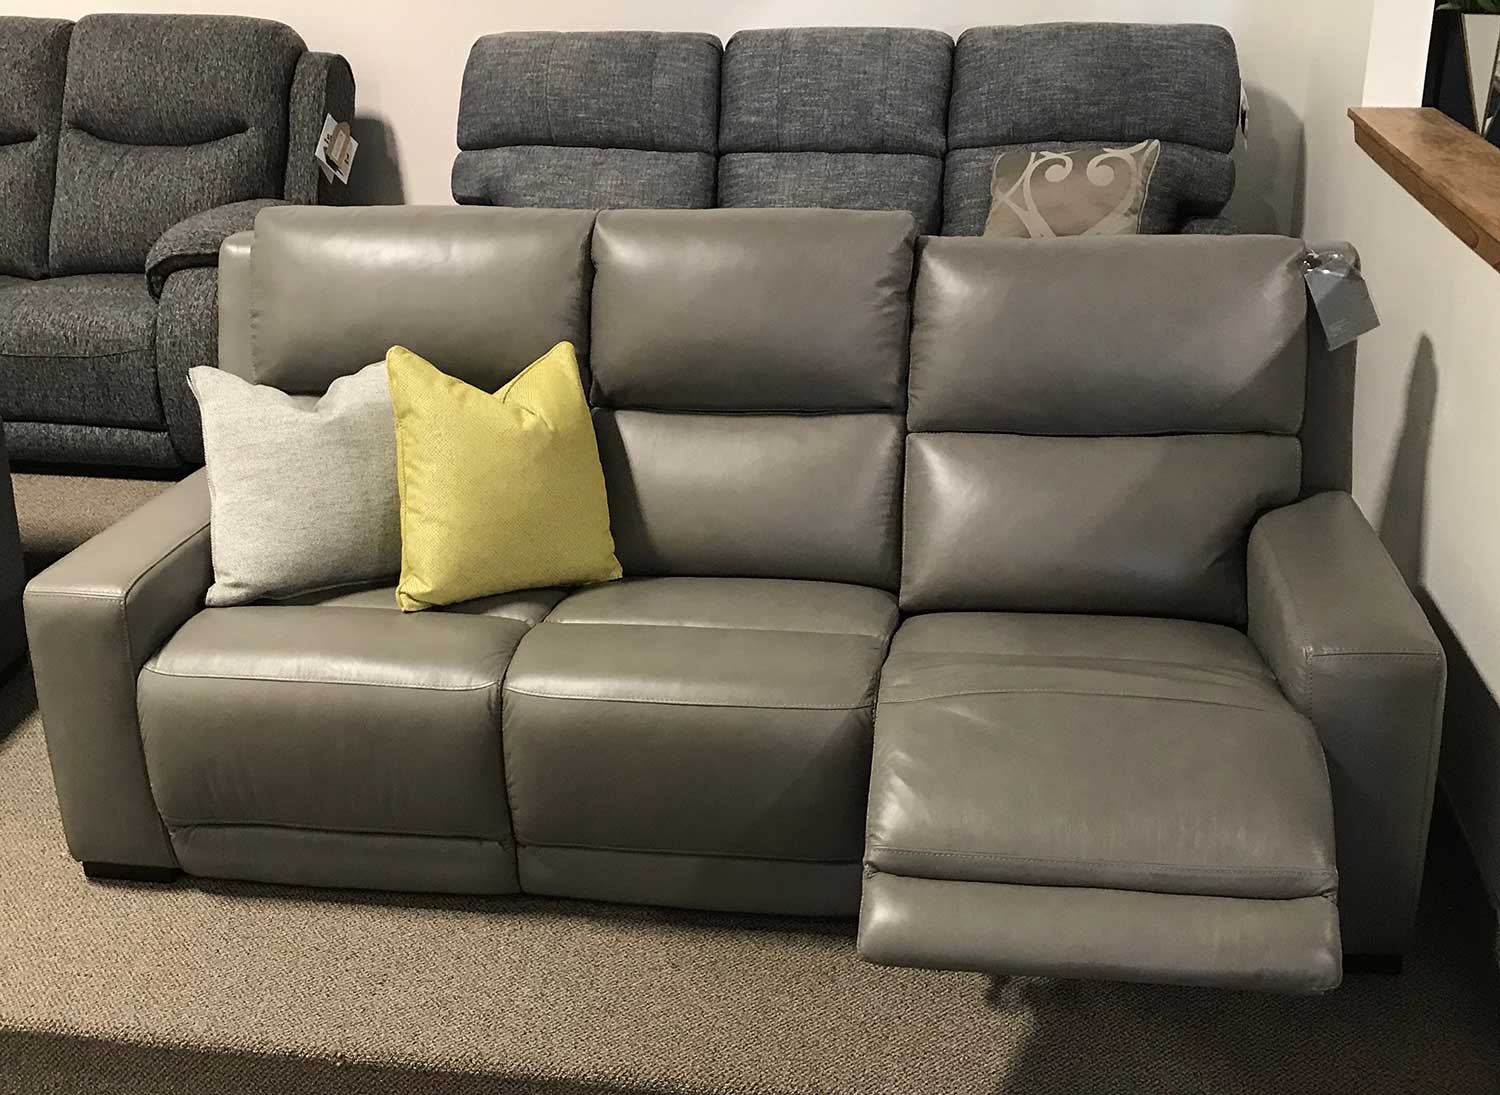 grey leather reclining sofa star furniture